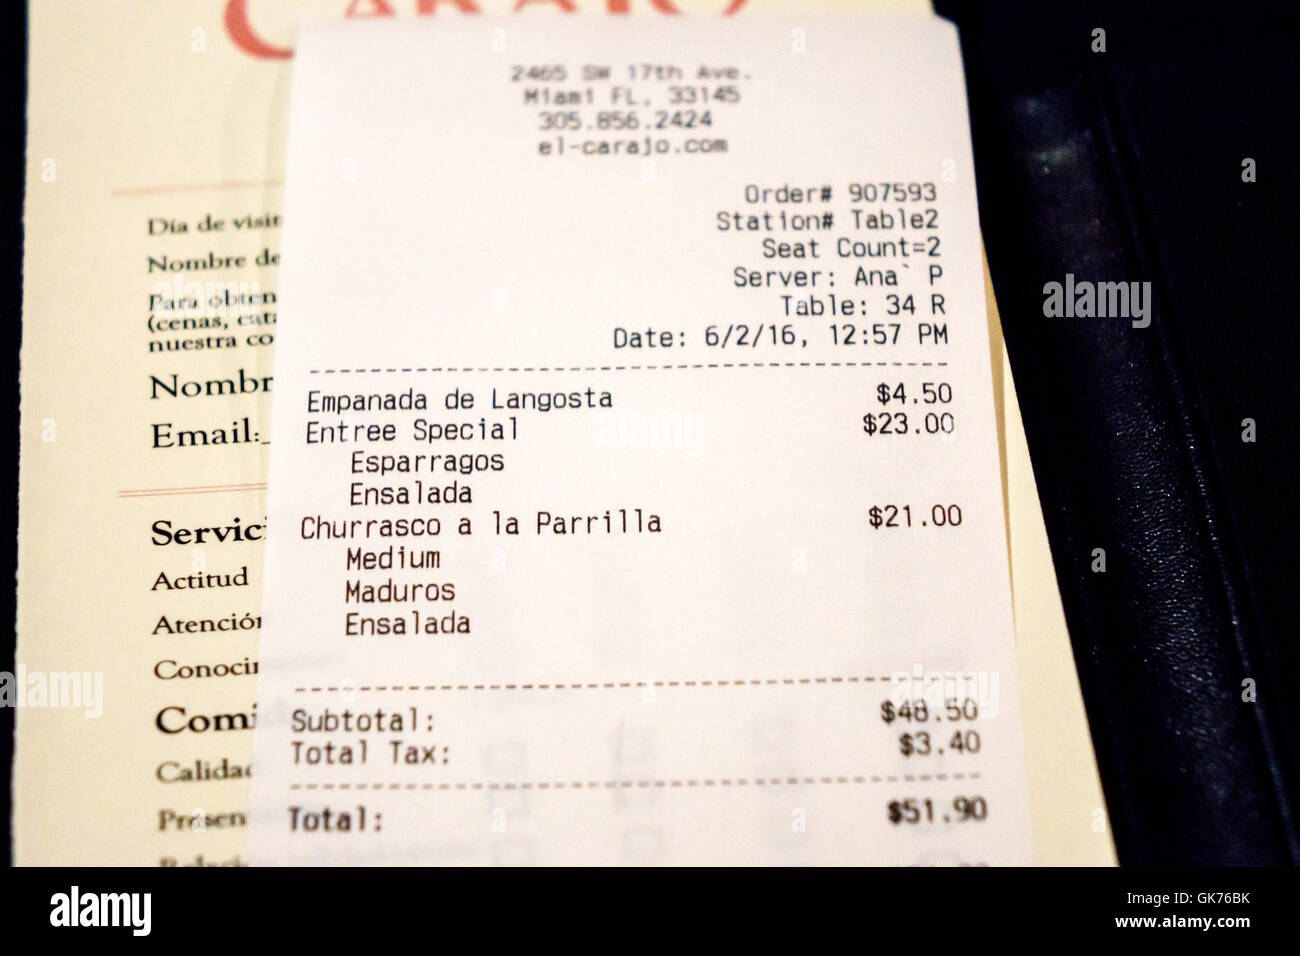 Miami Florida,El Carajo tapas wine bar restaurant itemized bill check,Spanish English language bilingual price subtotal total tax Entee special, Stock Photo